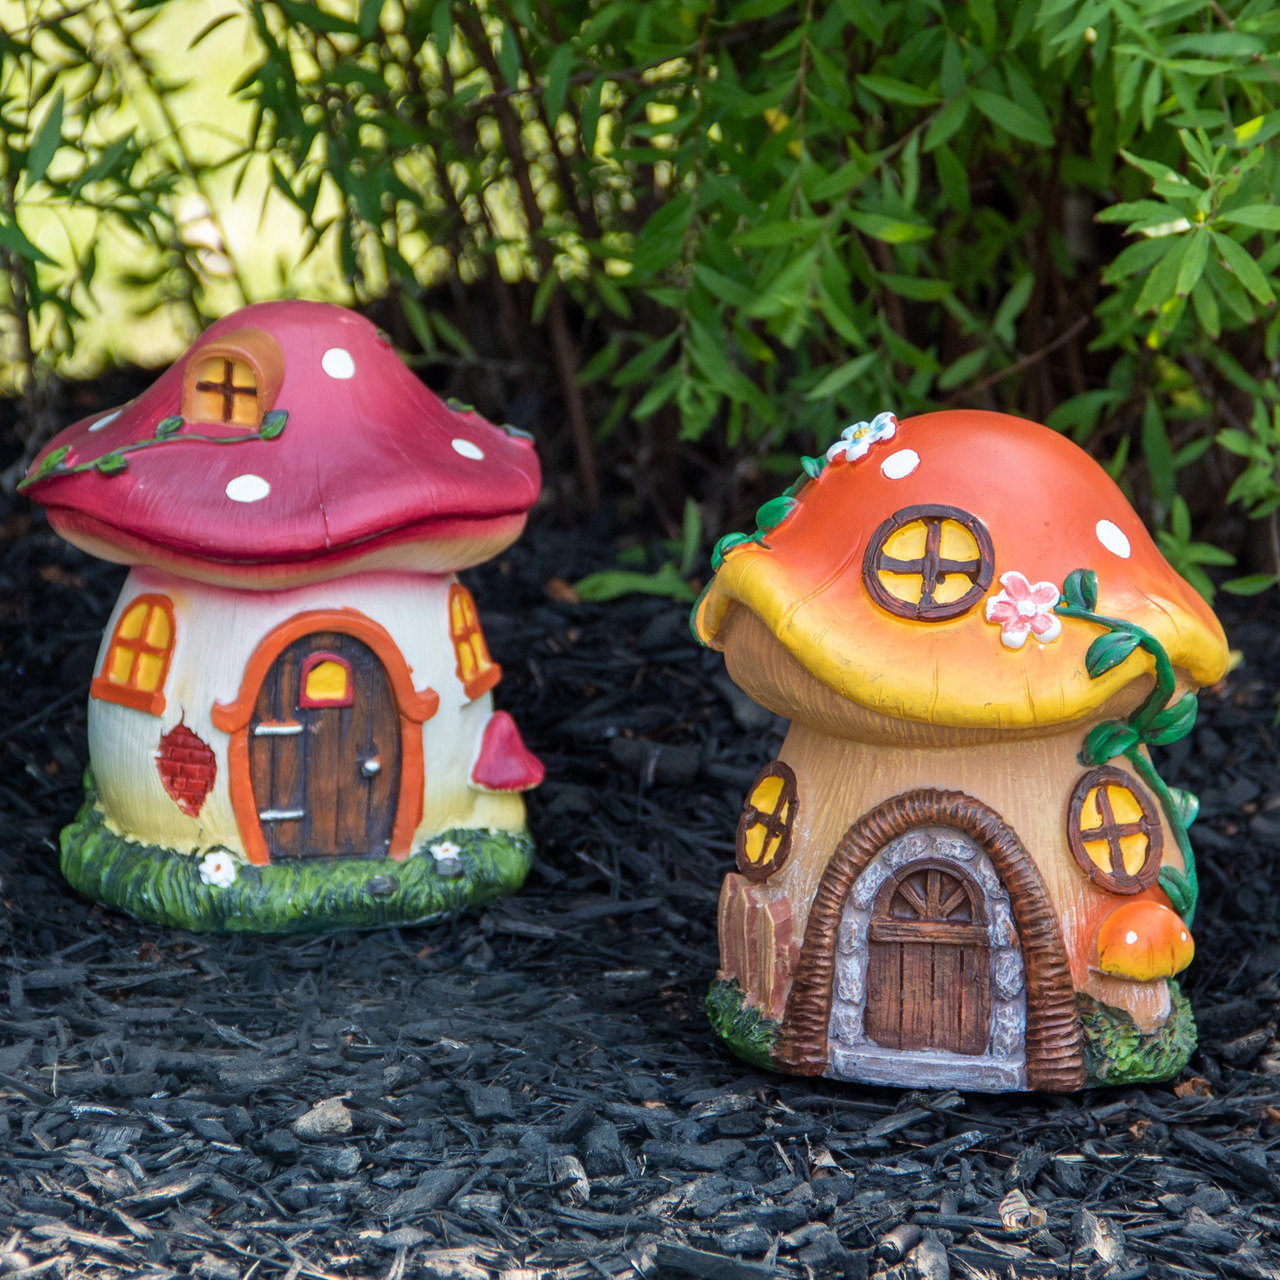 red mushroom house and orange mushroom house 6-1/4 inch garden statues